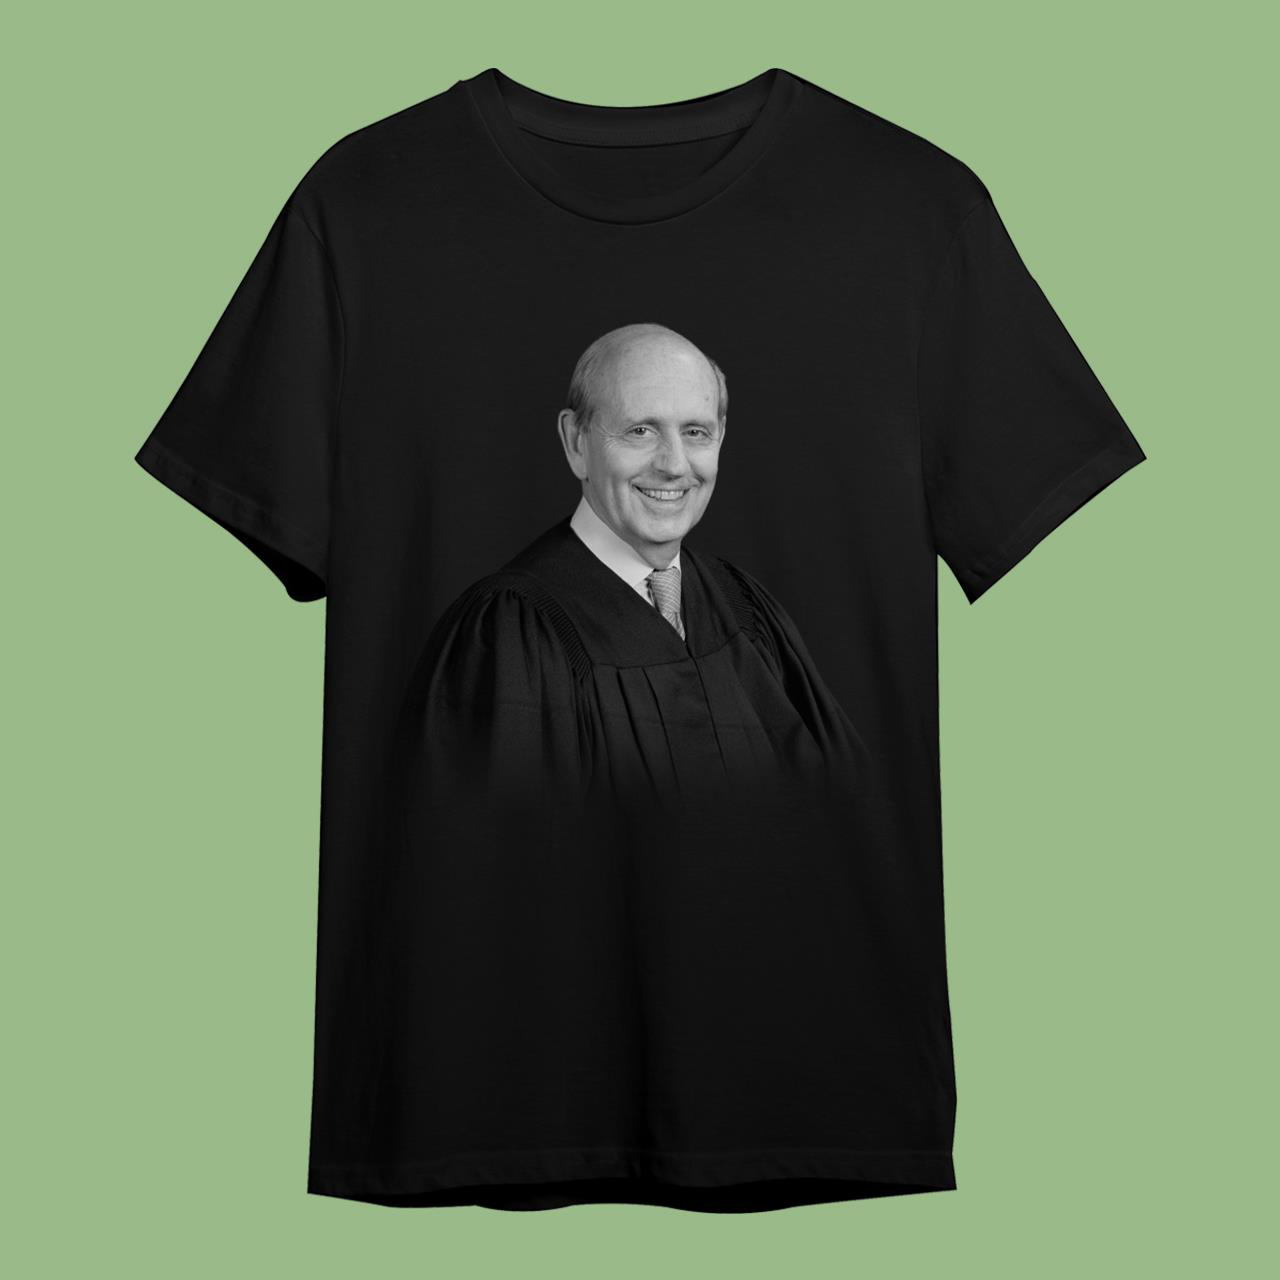 Stephen Breyer Shirt